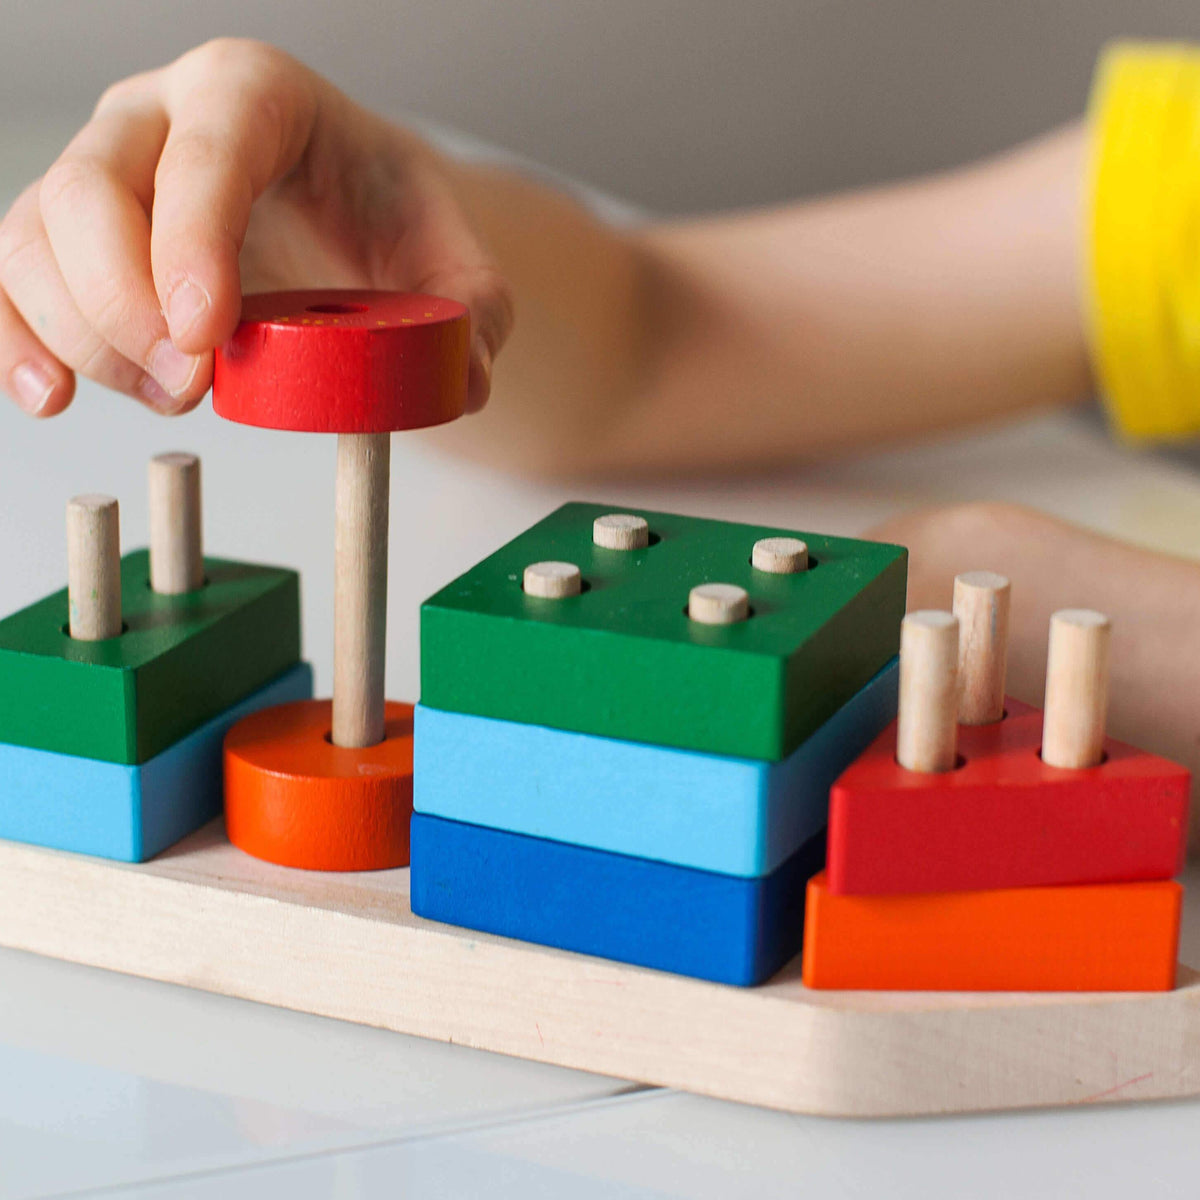 Montessori Toys - by Montessori Generation